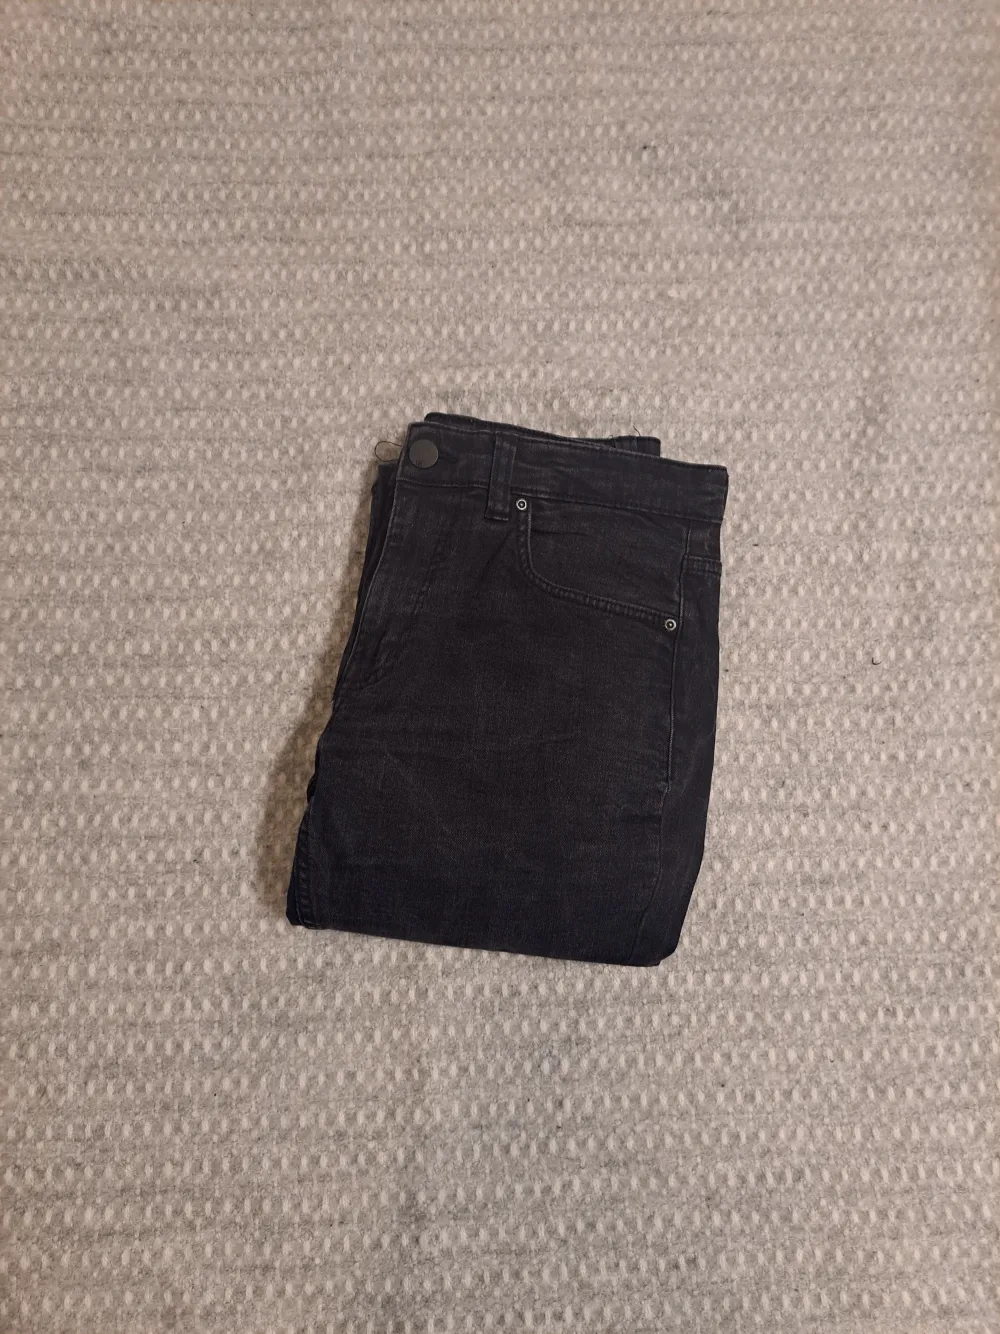 Lager 157 svarta jeans i storlek 32, nya. Original pris 350. Frakt kostnad 60kr. Jeans & Byxor.